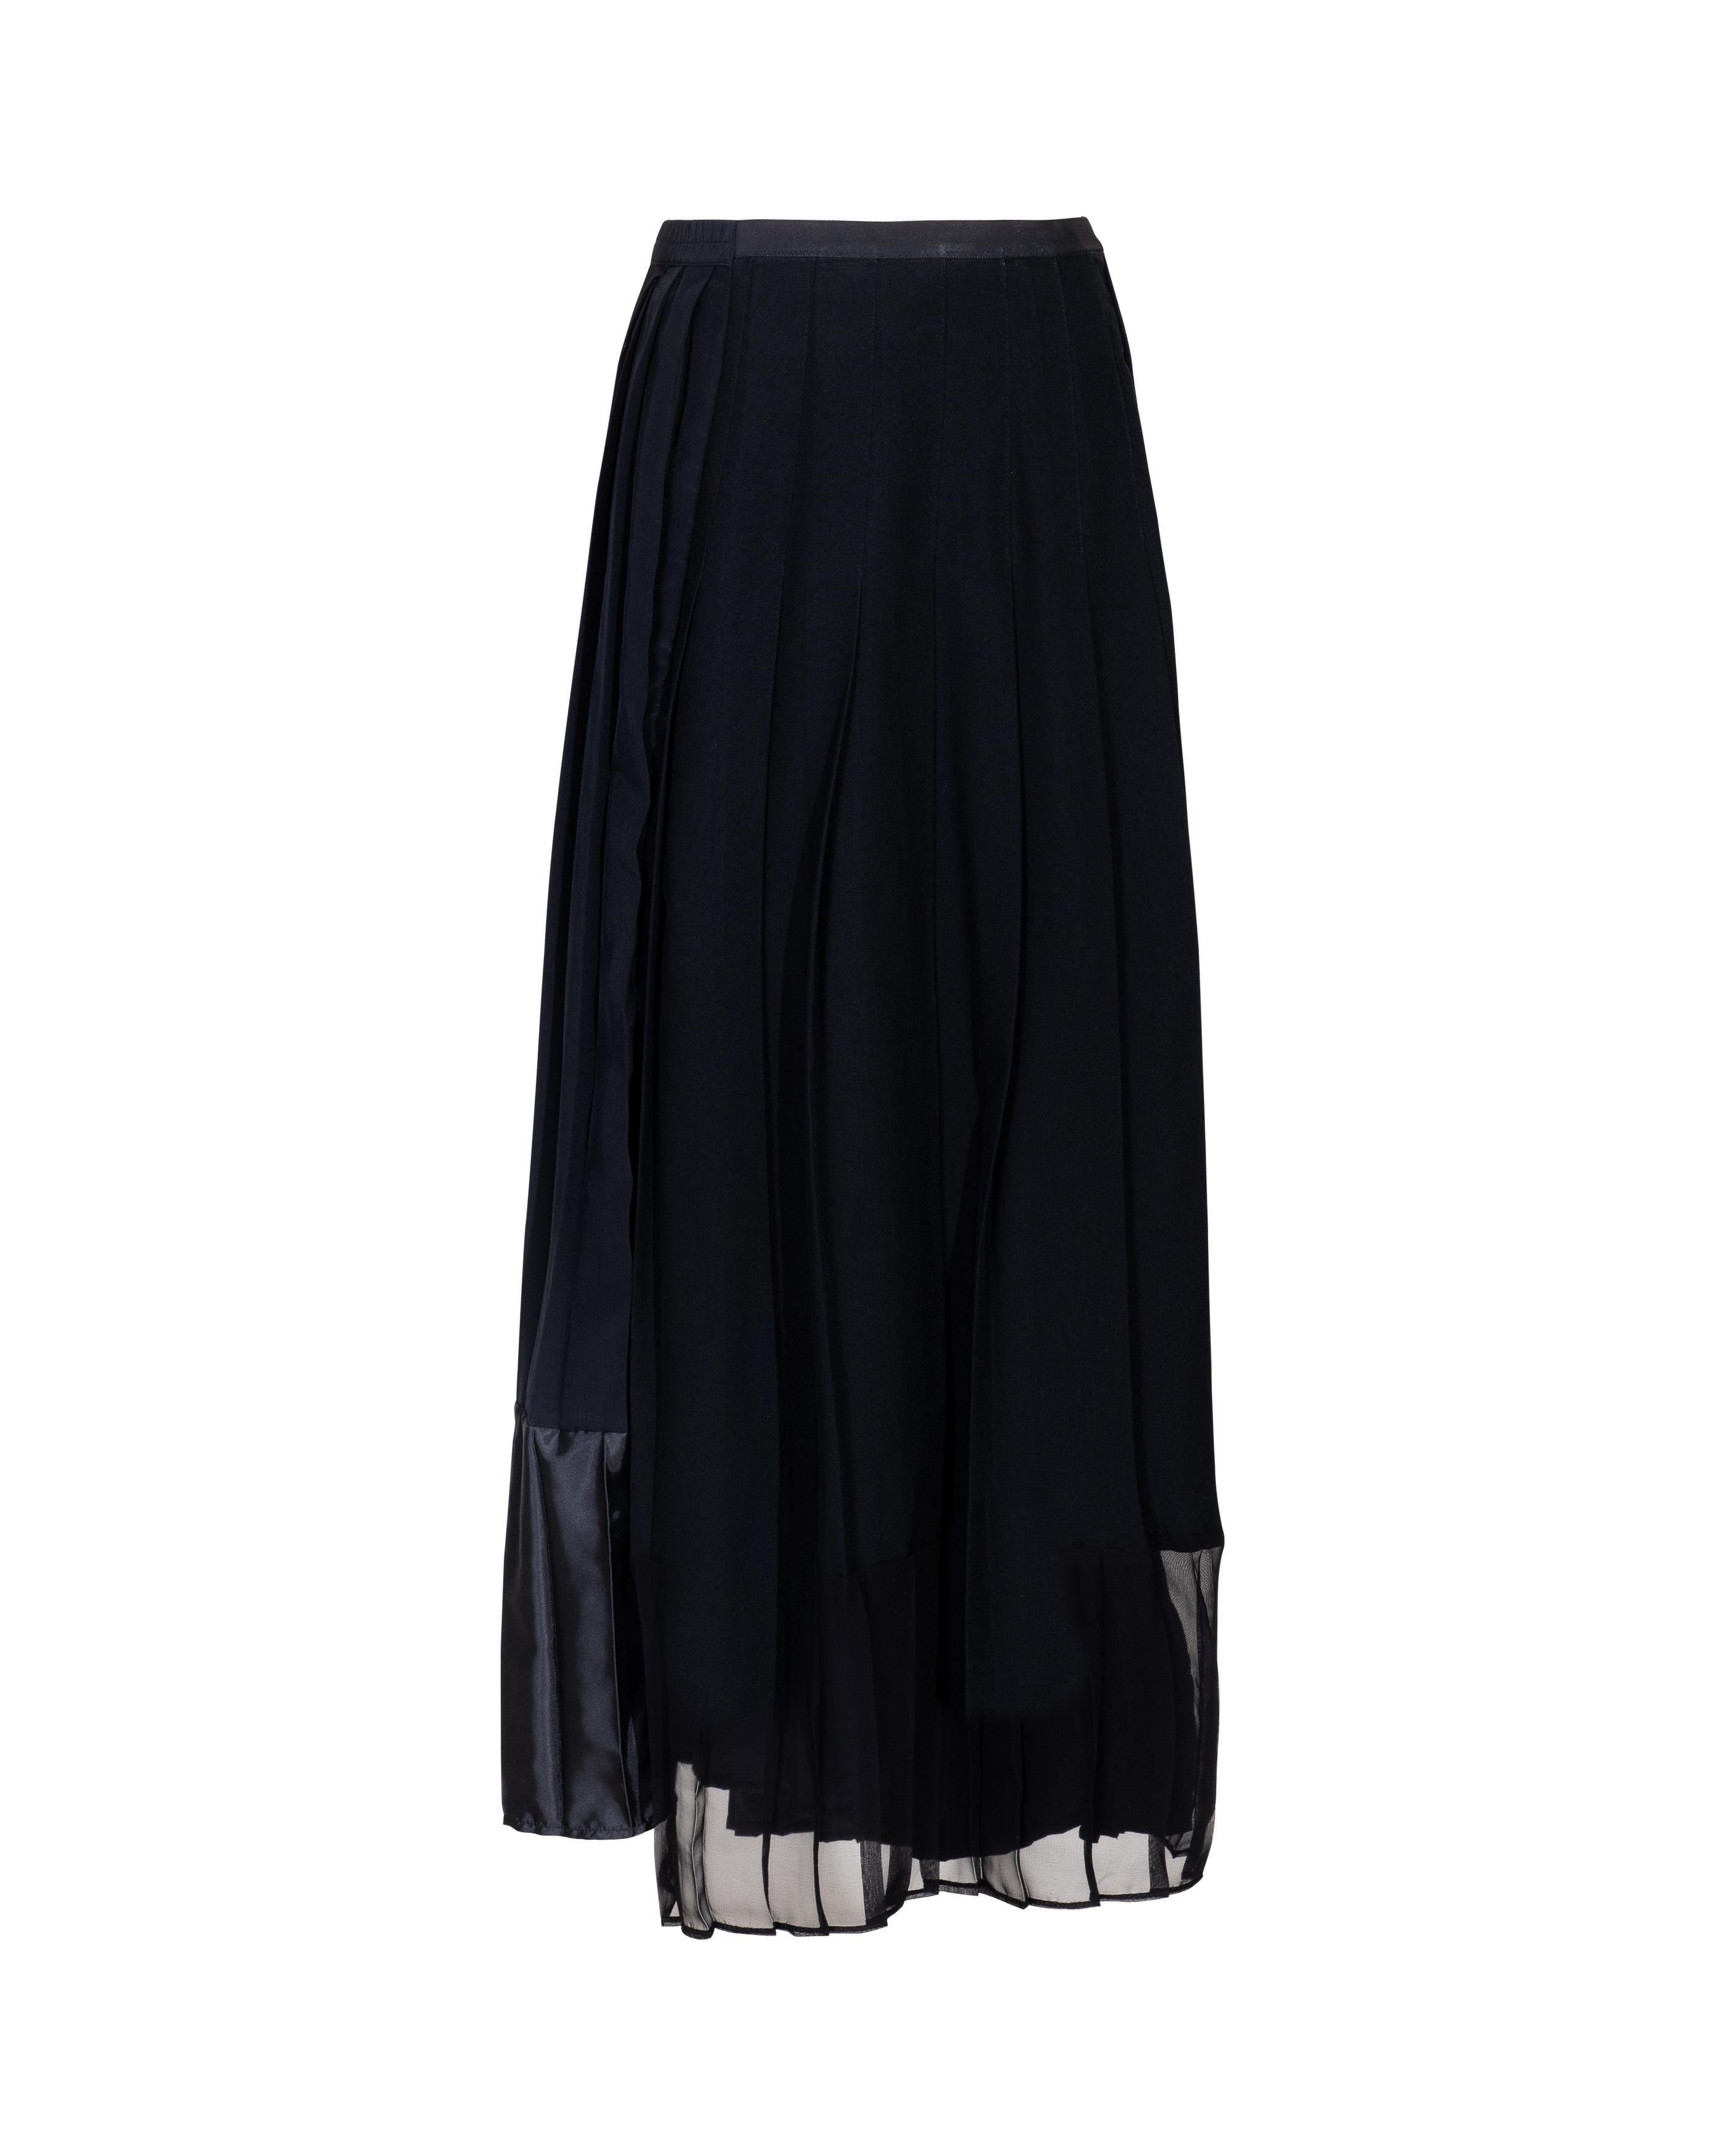 S/S 2001 Maison Martin Margiela One-of-One Black Pleated Artisanal Maxi Skirt For Sale 6